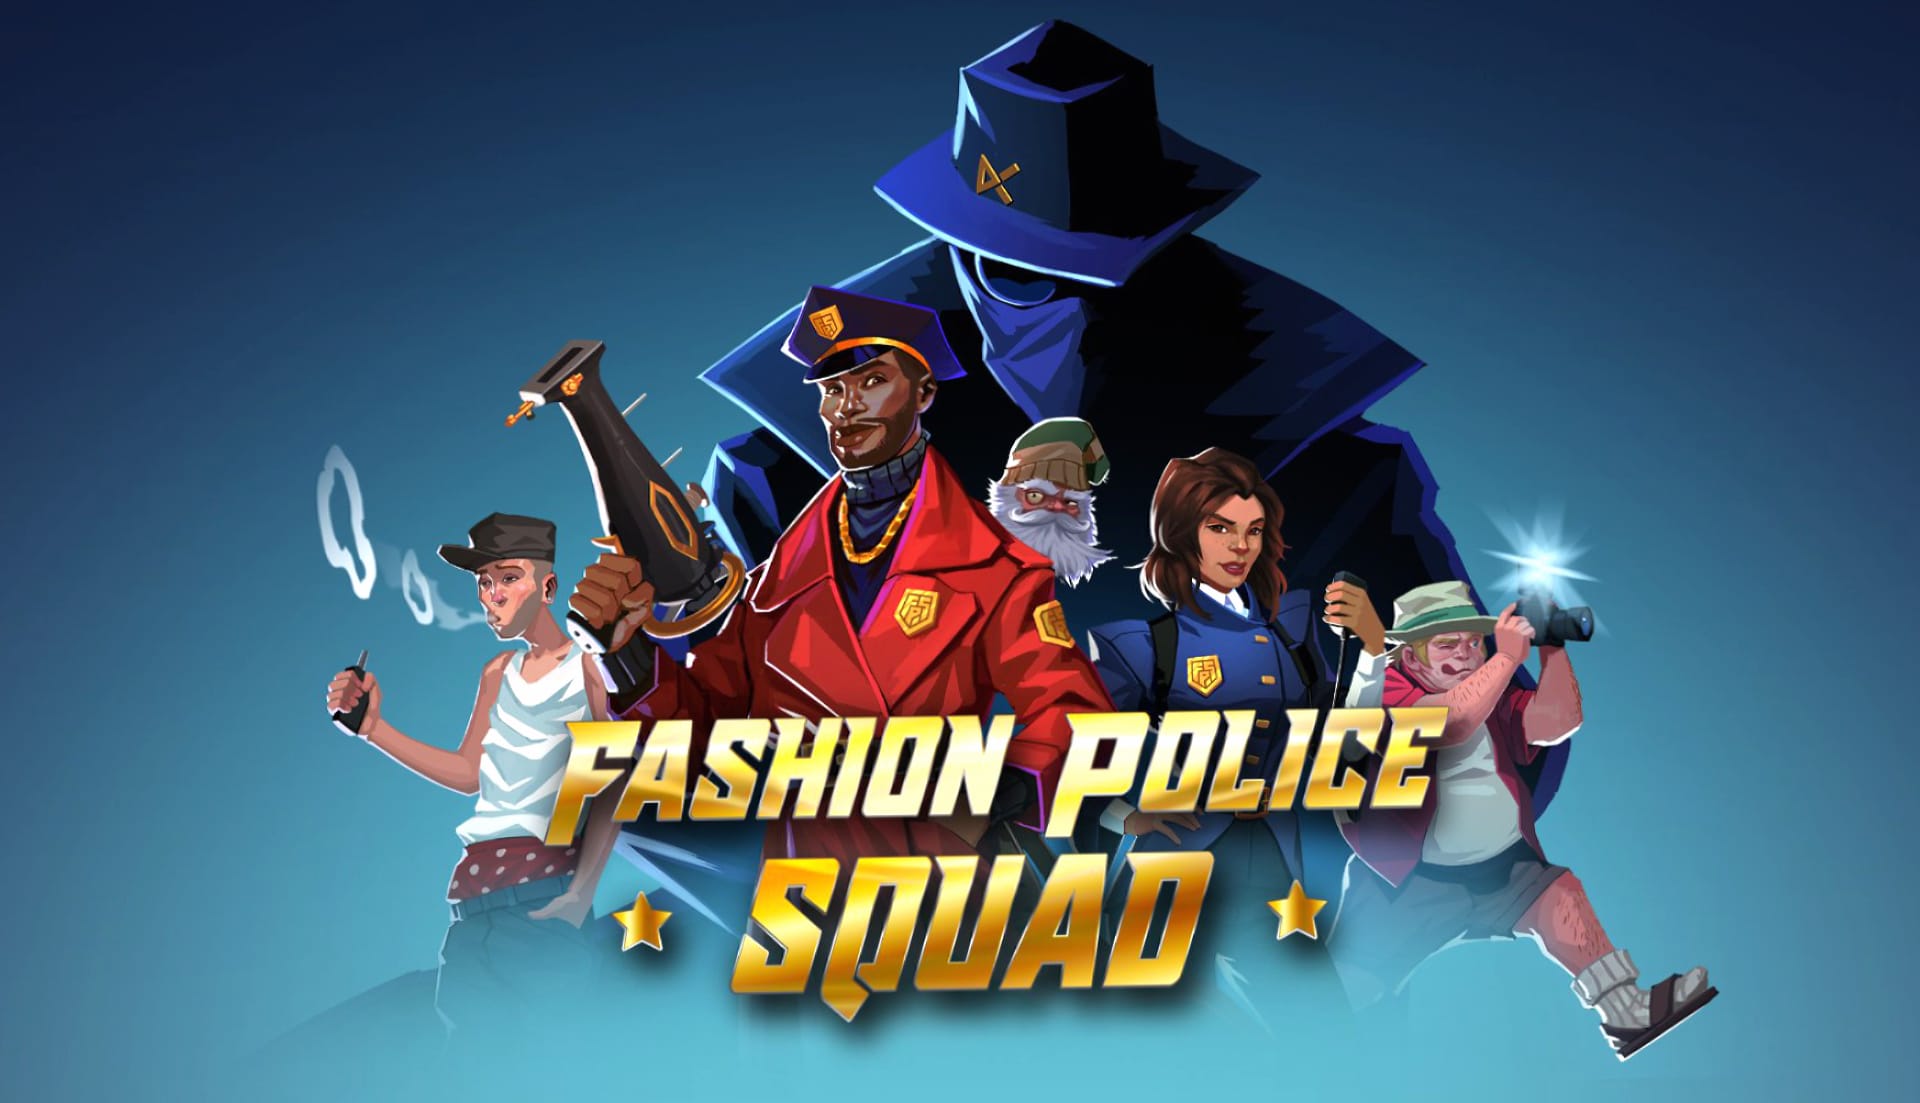 Fashion Police Squad wallpapers HD quality